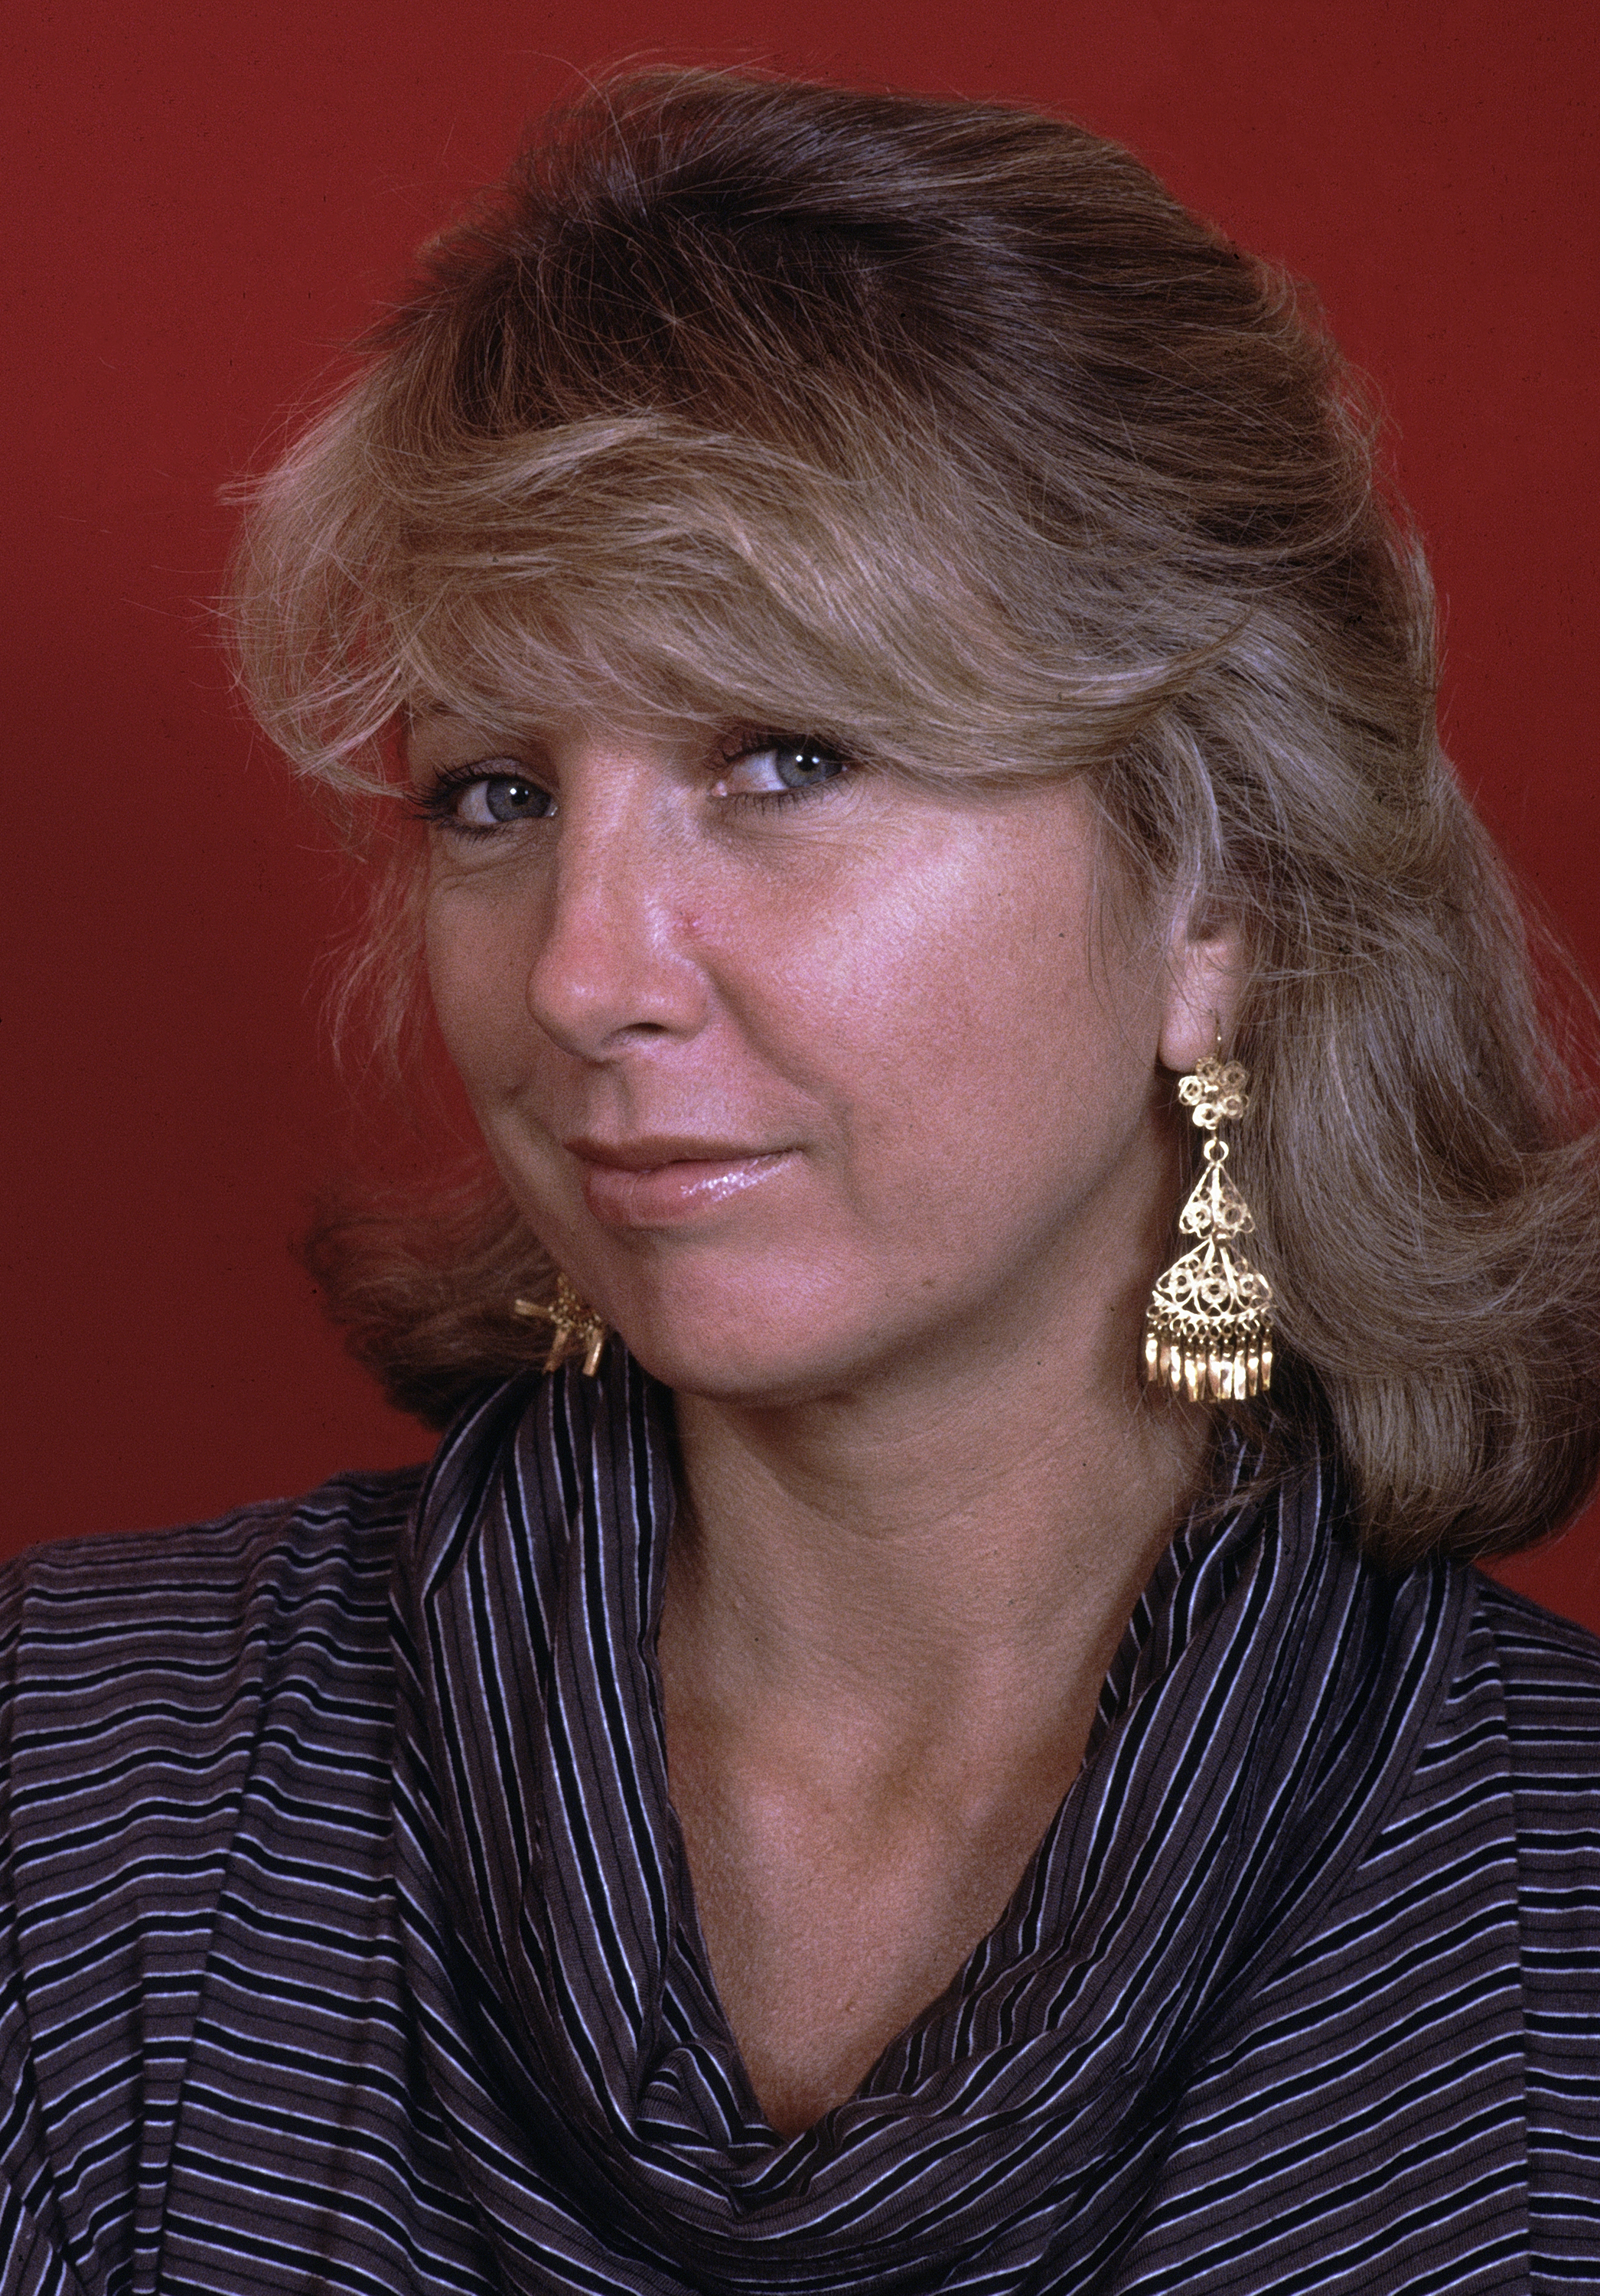 Teri Garr portrait in Los Angeles, California taken on October 24, 1984. | Source: Getty Images